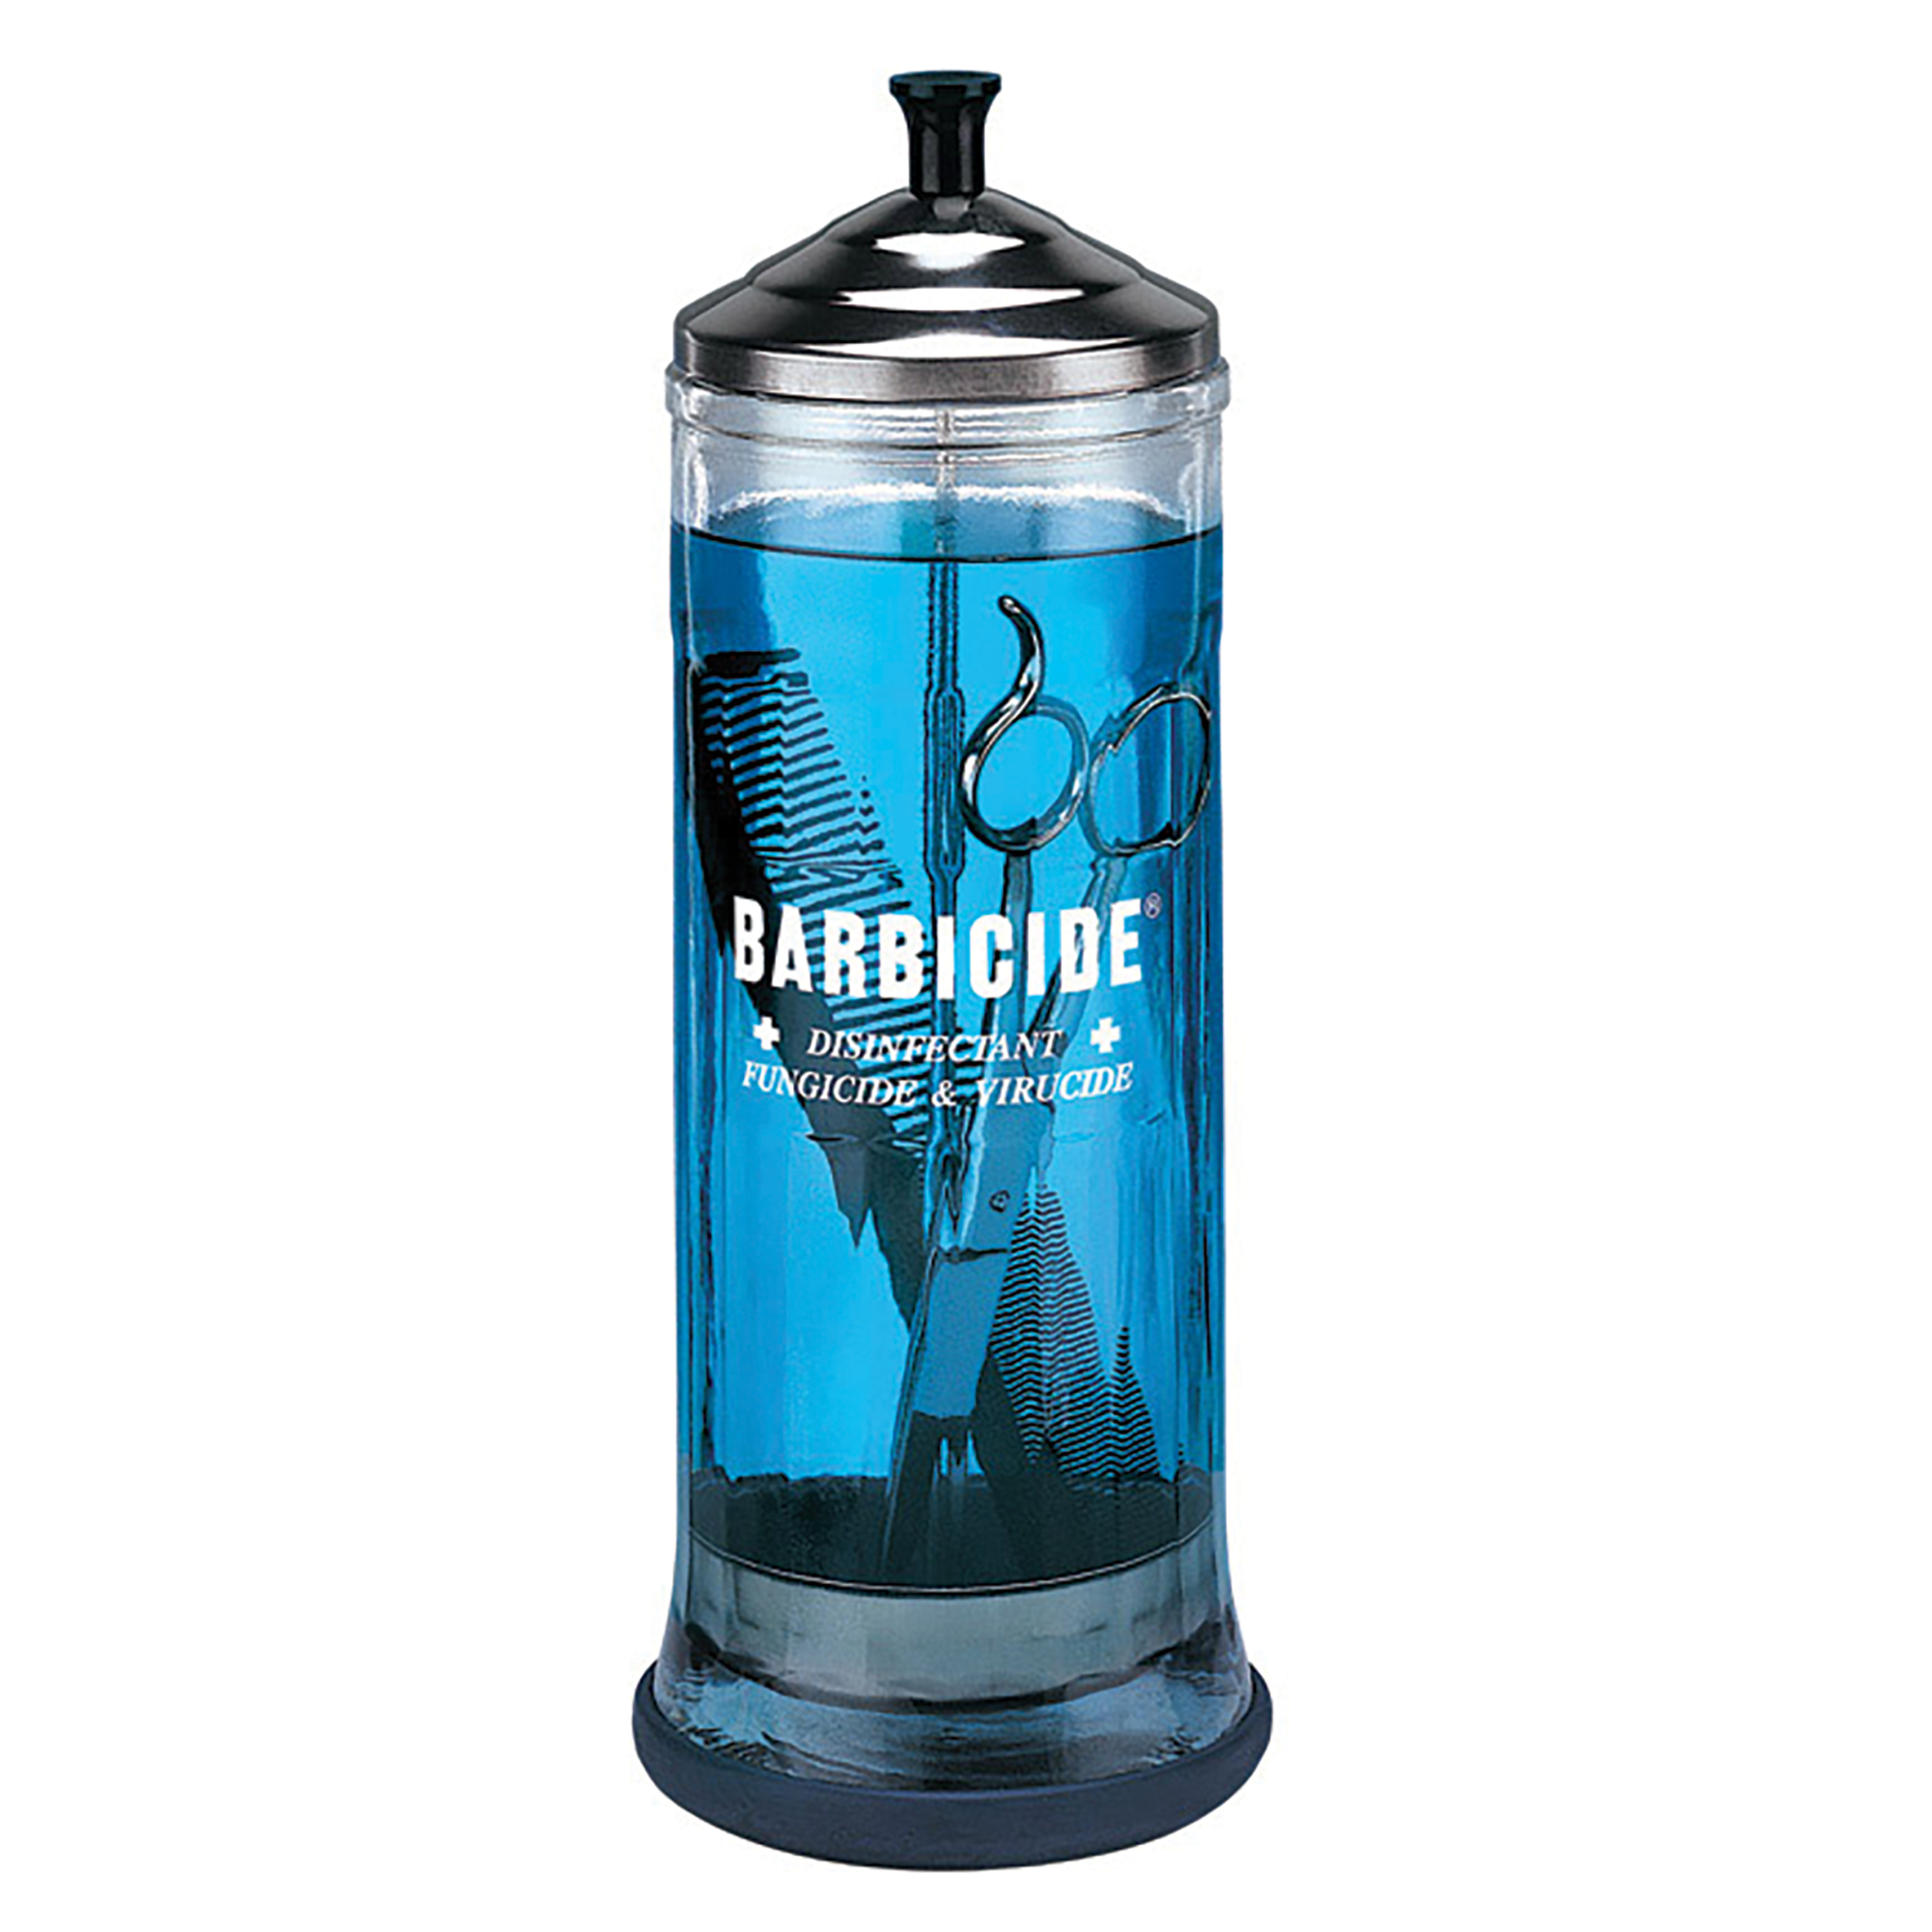 Barbicide Disinfecting Jar, 37 oz.